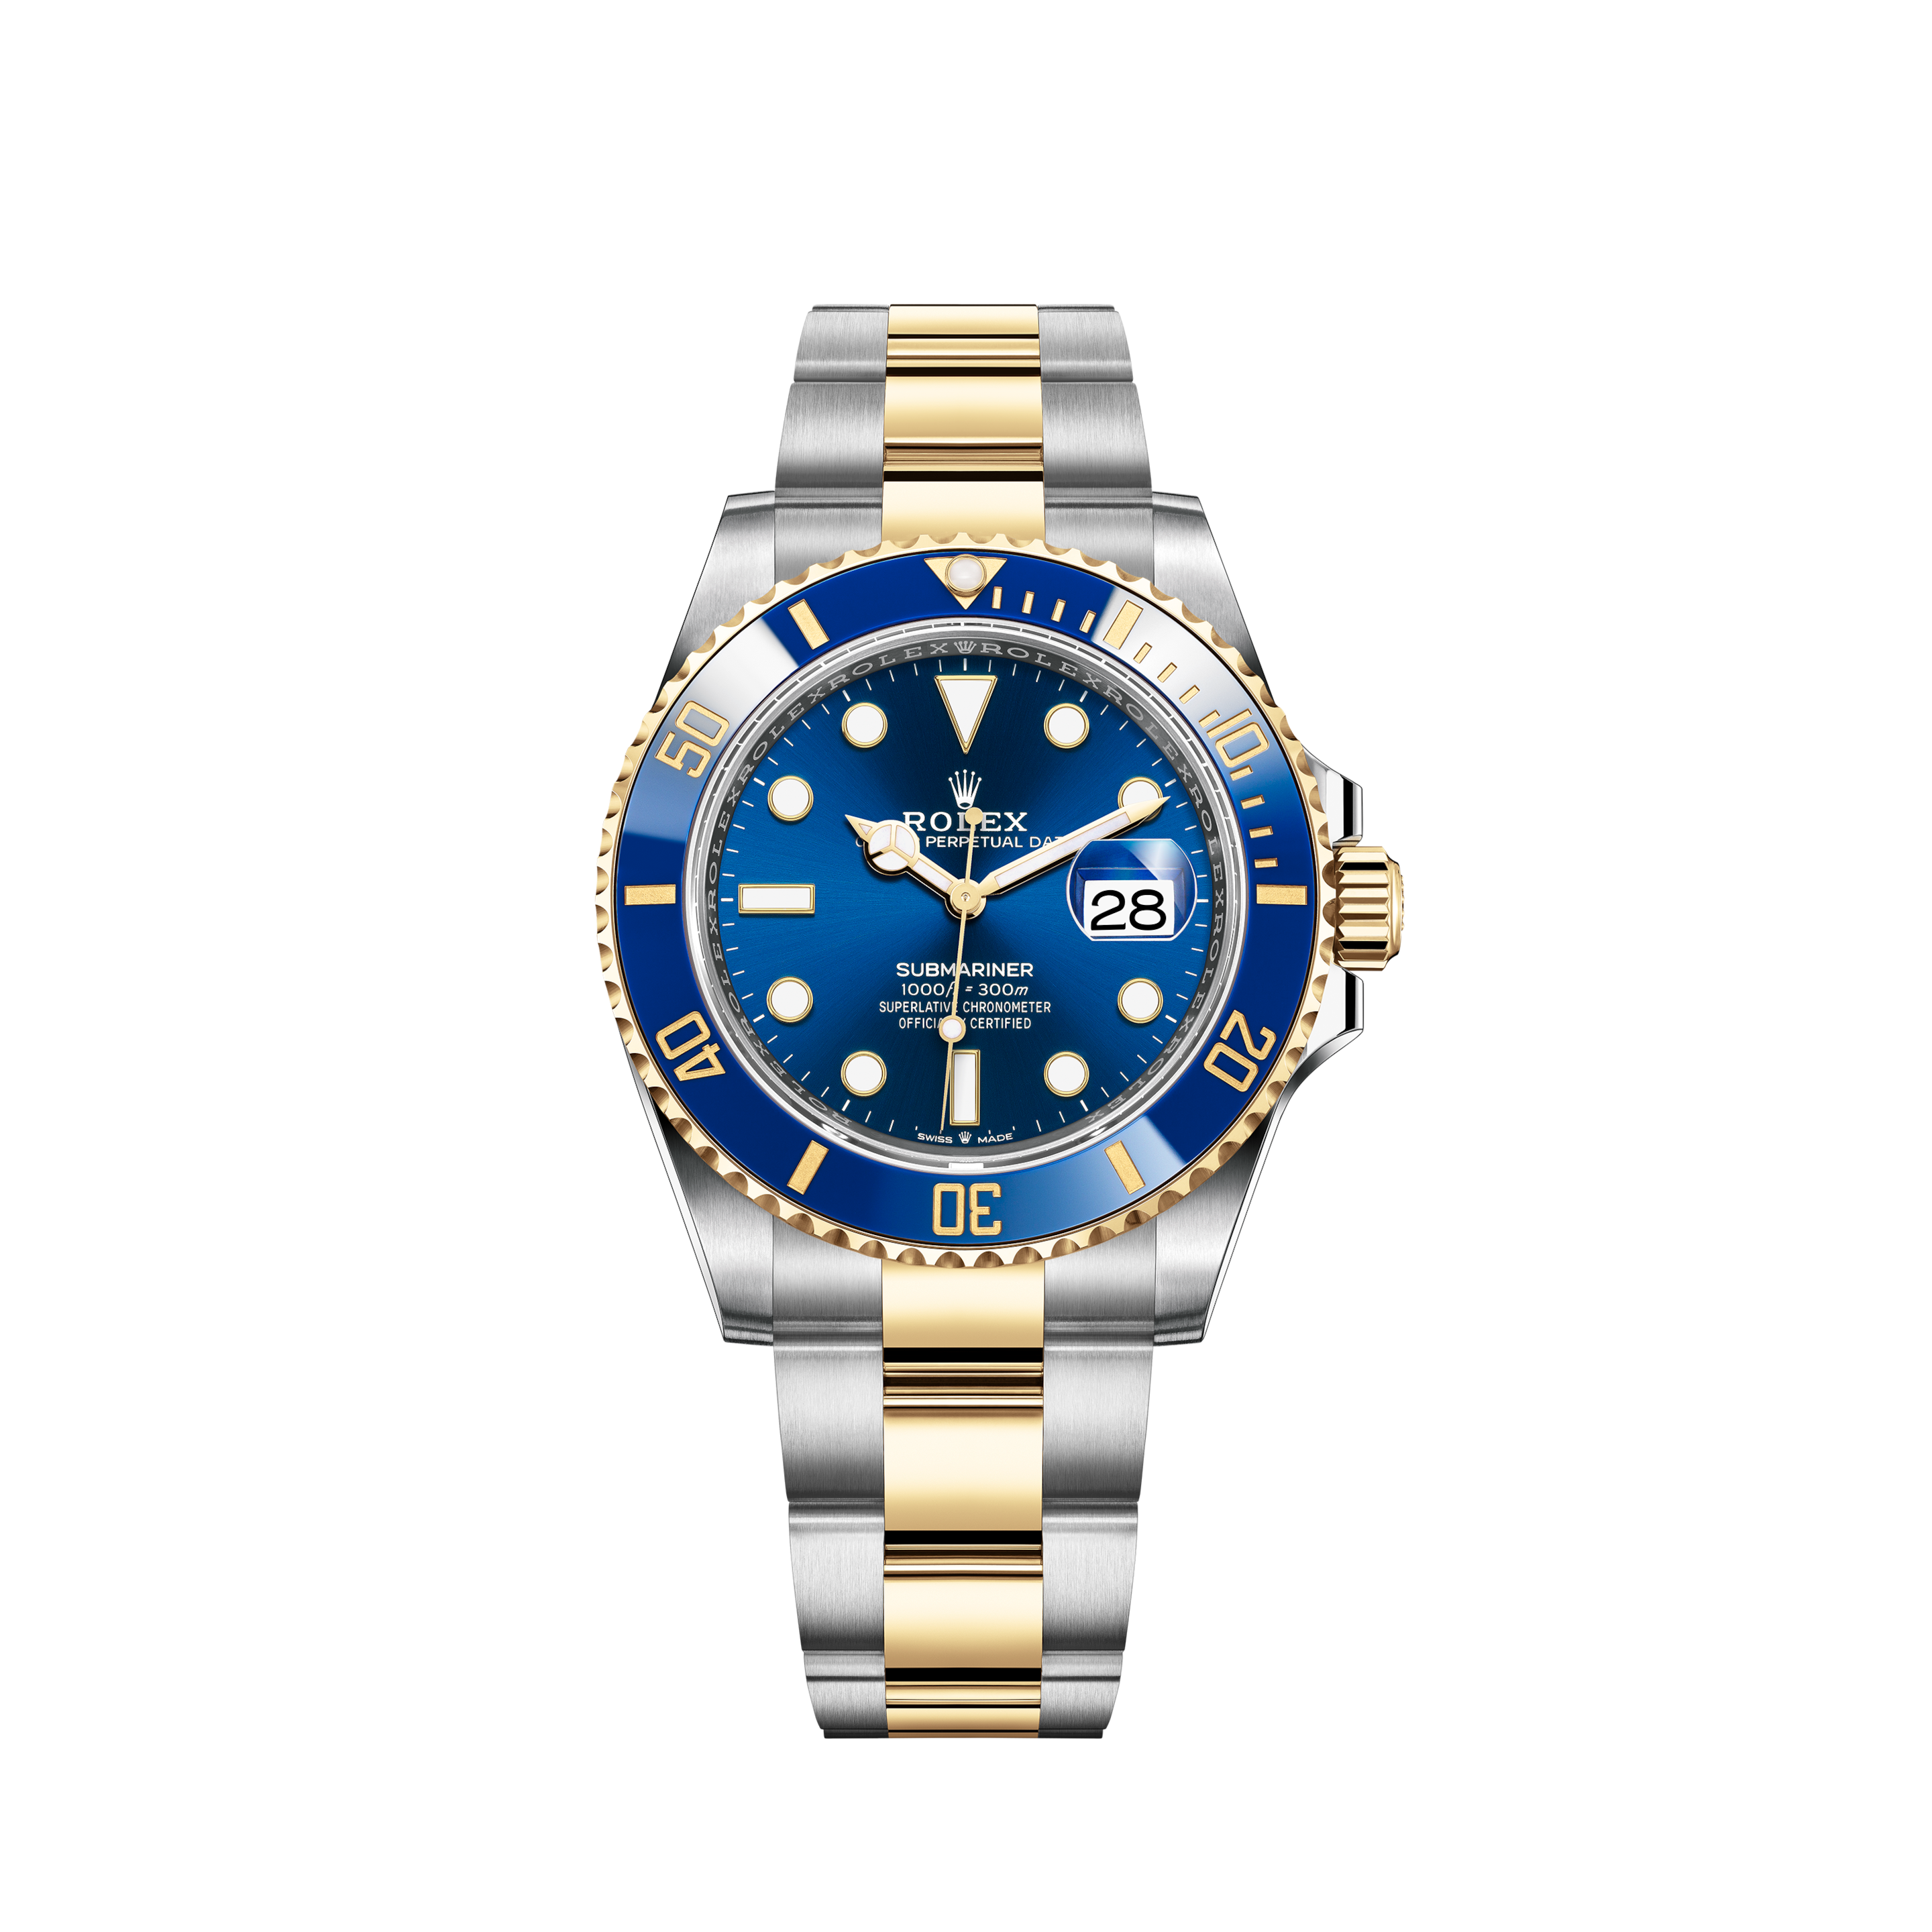 Rolex Datejust II Men's 41mm Stainless Steel Watch Silver/Blue Arabic Dial 116300Rolex Datejust II Men's 41mm Stainless Steel Watch White Dial 116300